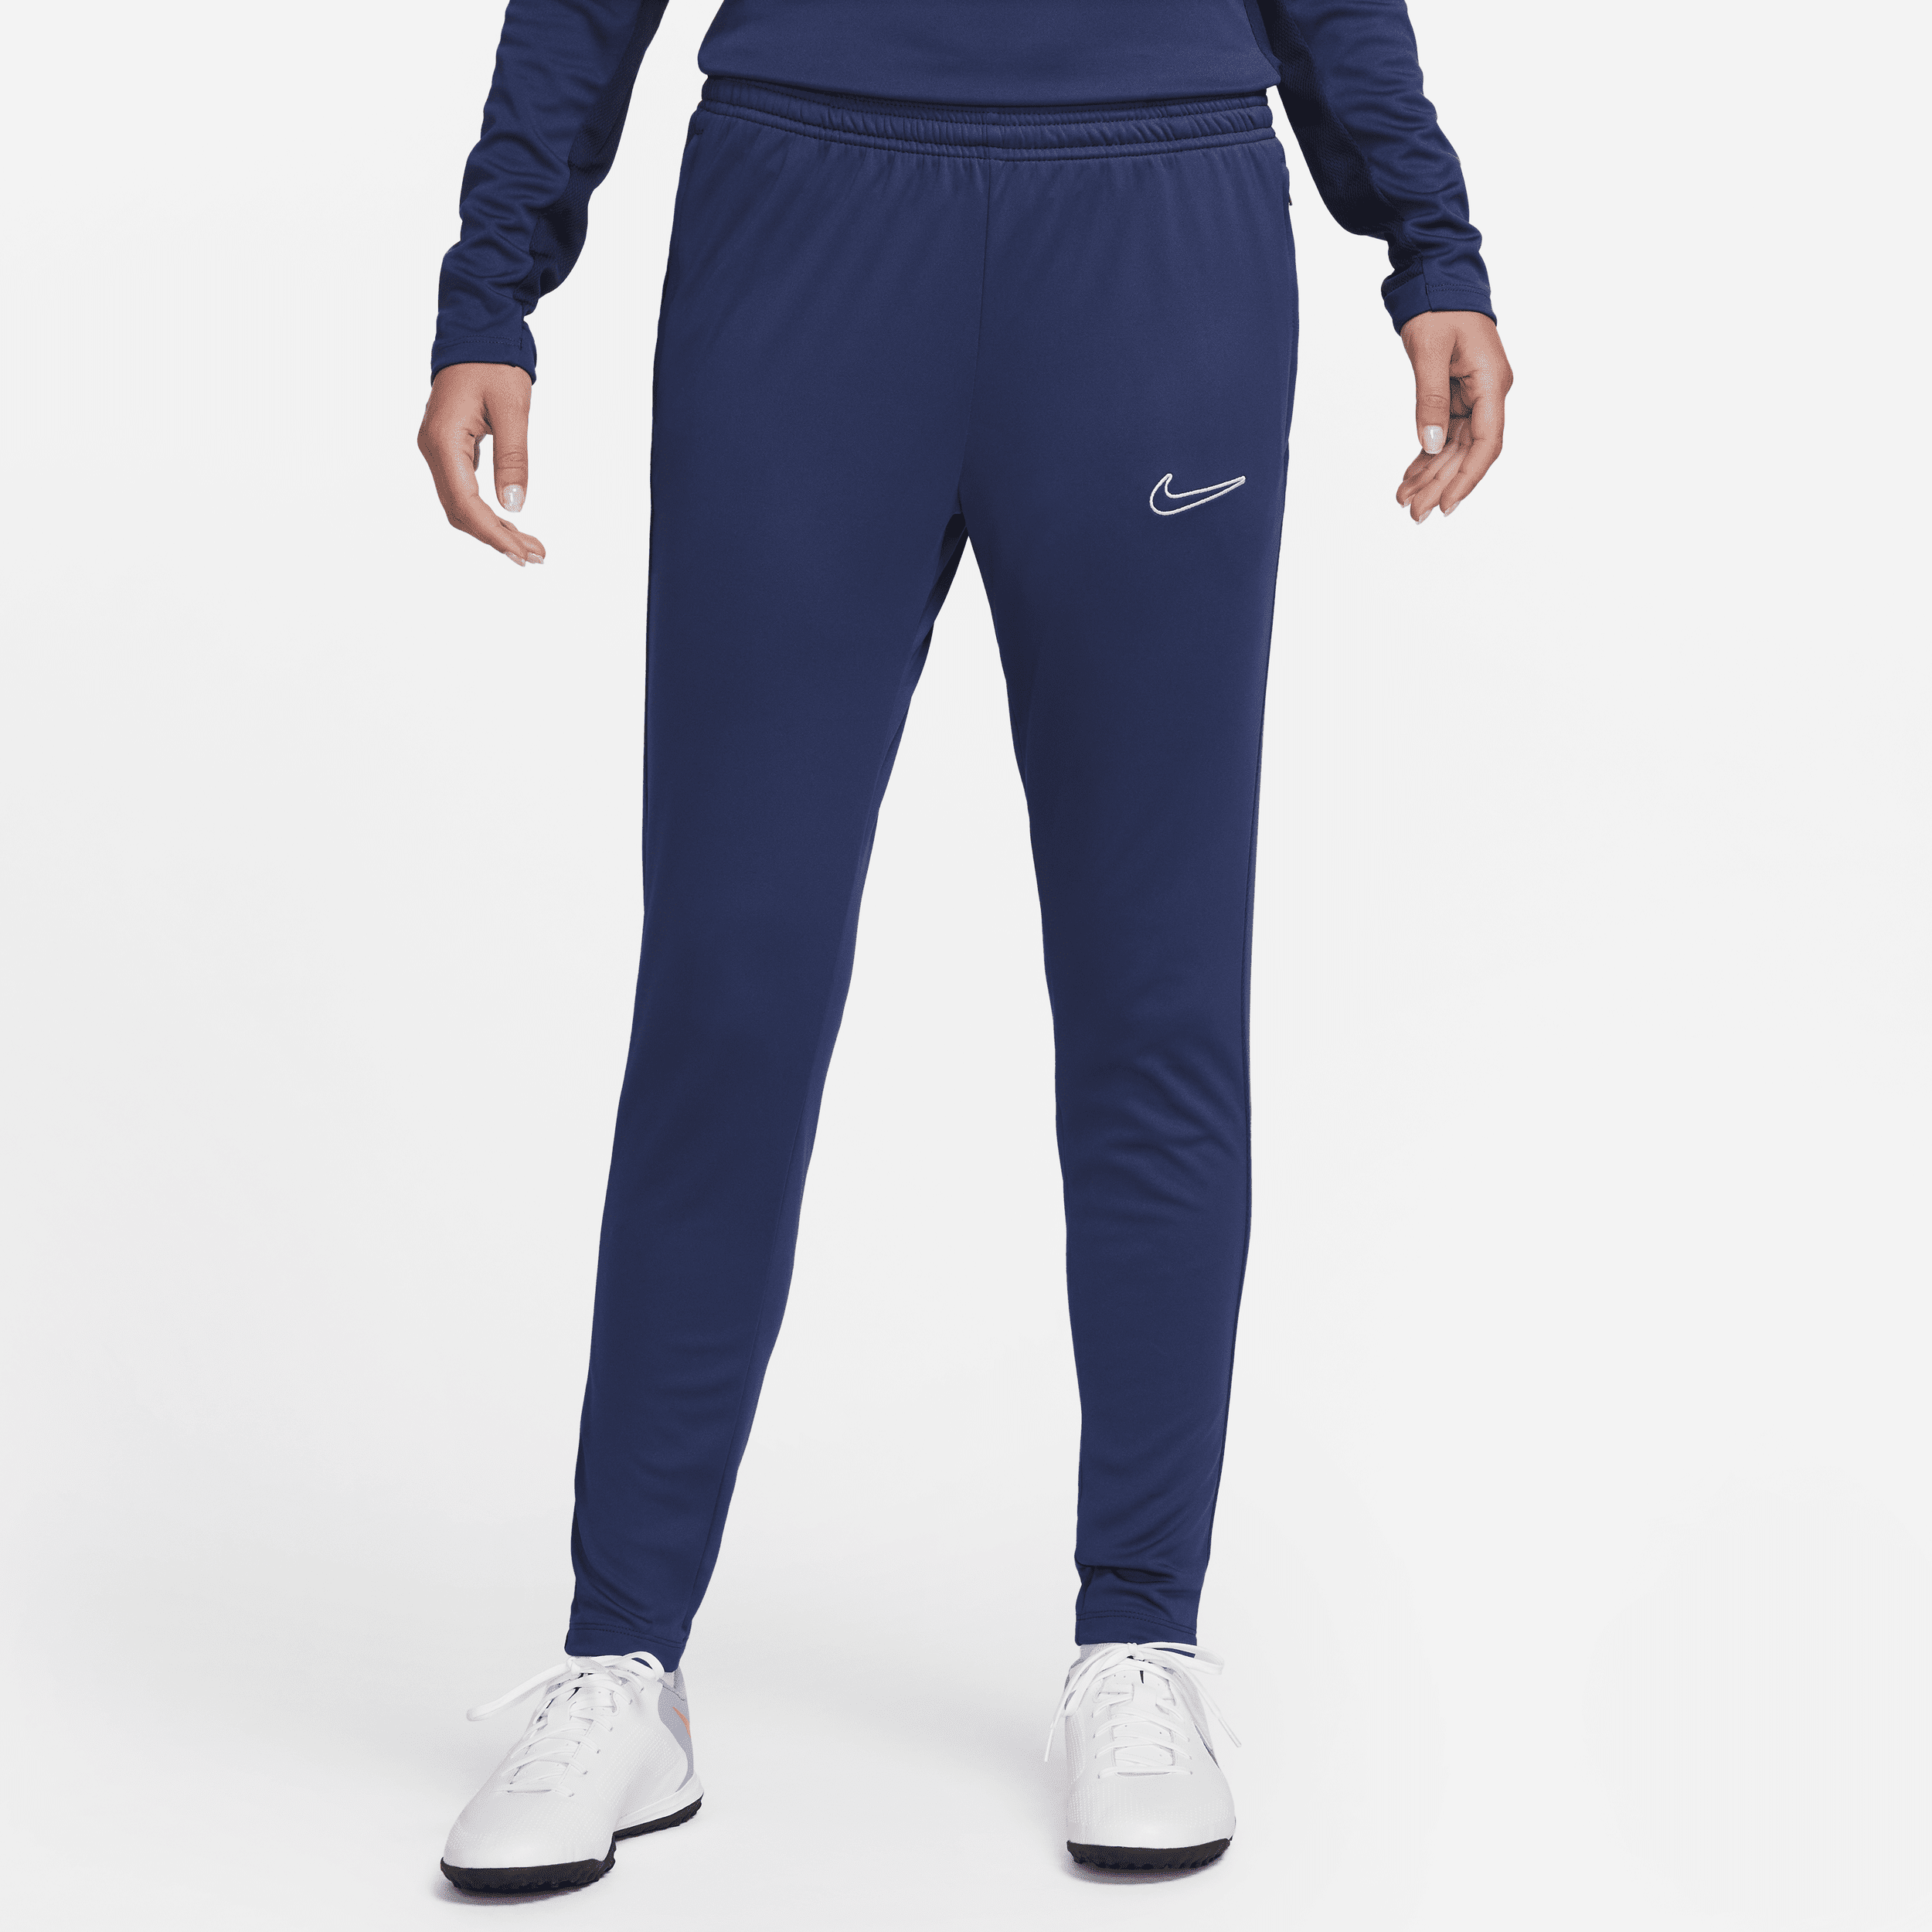 Nike Dri-FIT Academy-fodboldbukser til kvinder - blå